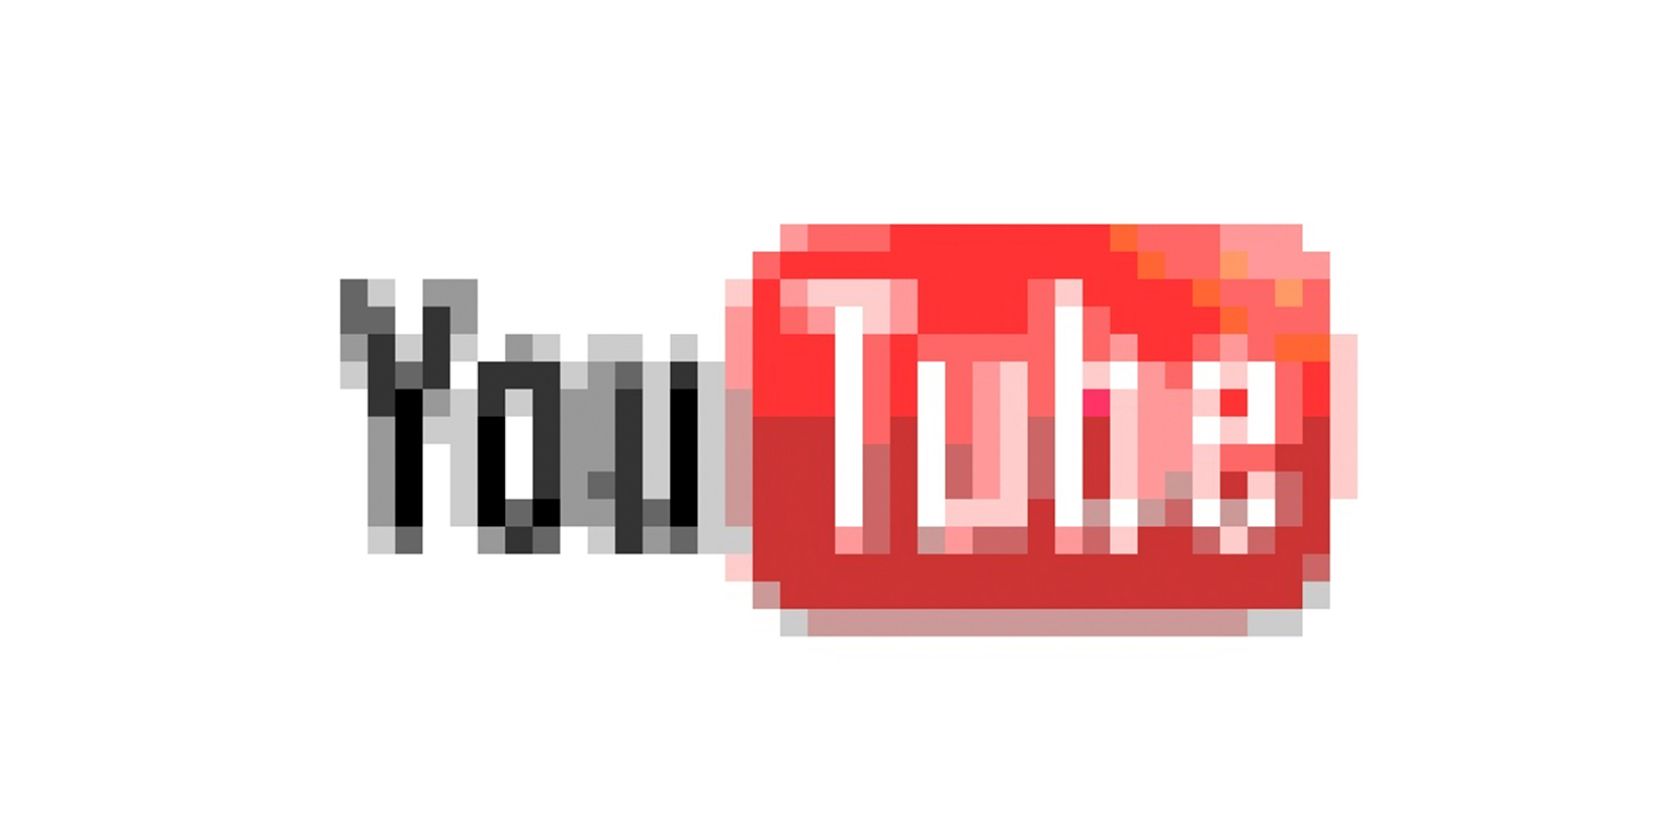 A pixelated YouTube logo